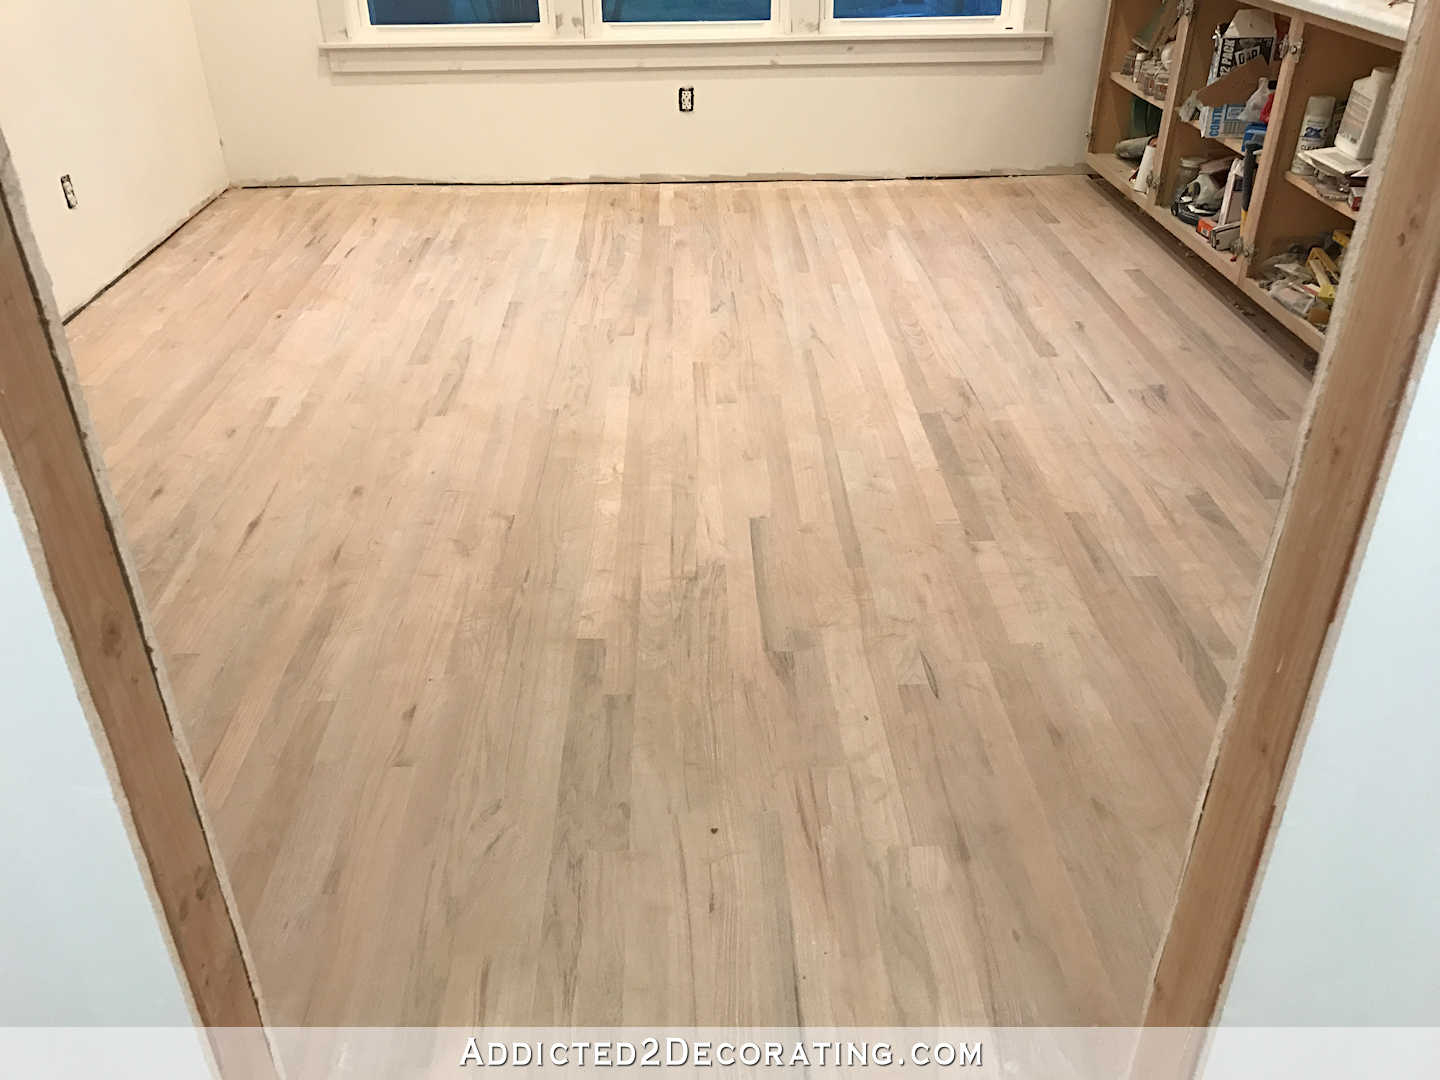 red oak hardwood floors sanded before staining - breakfast room